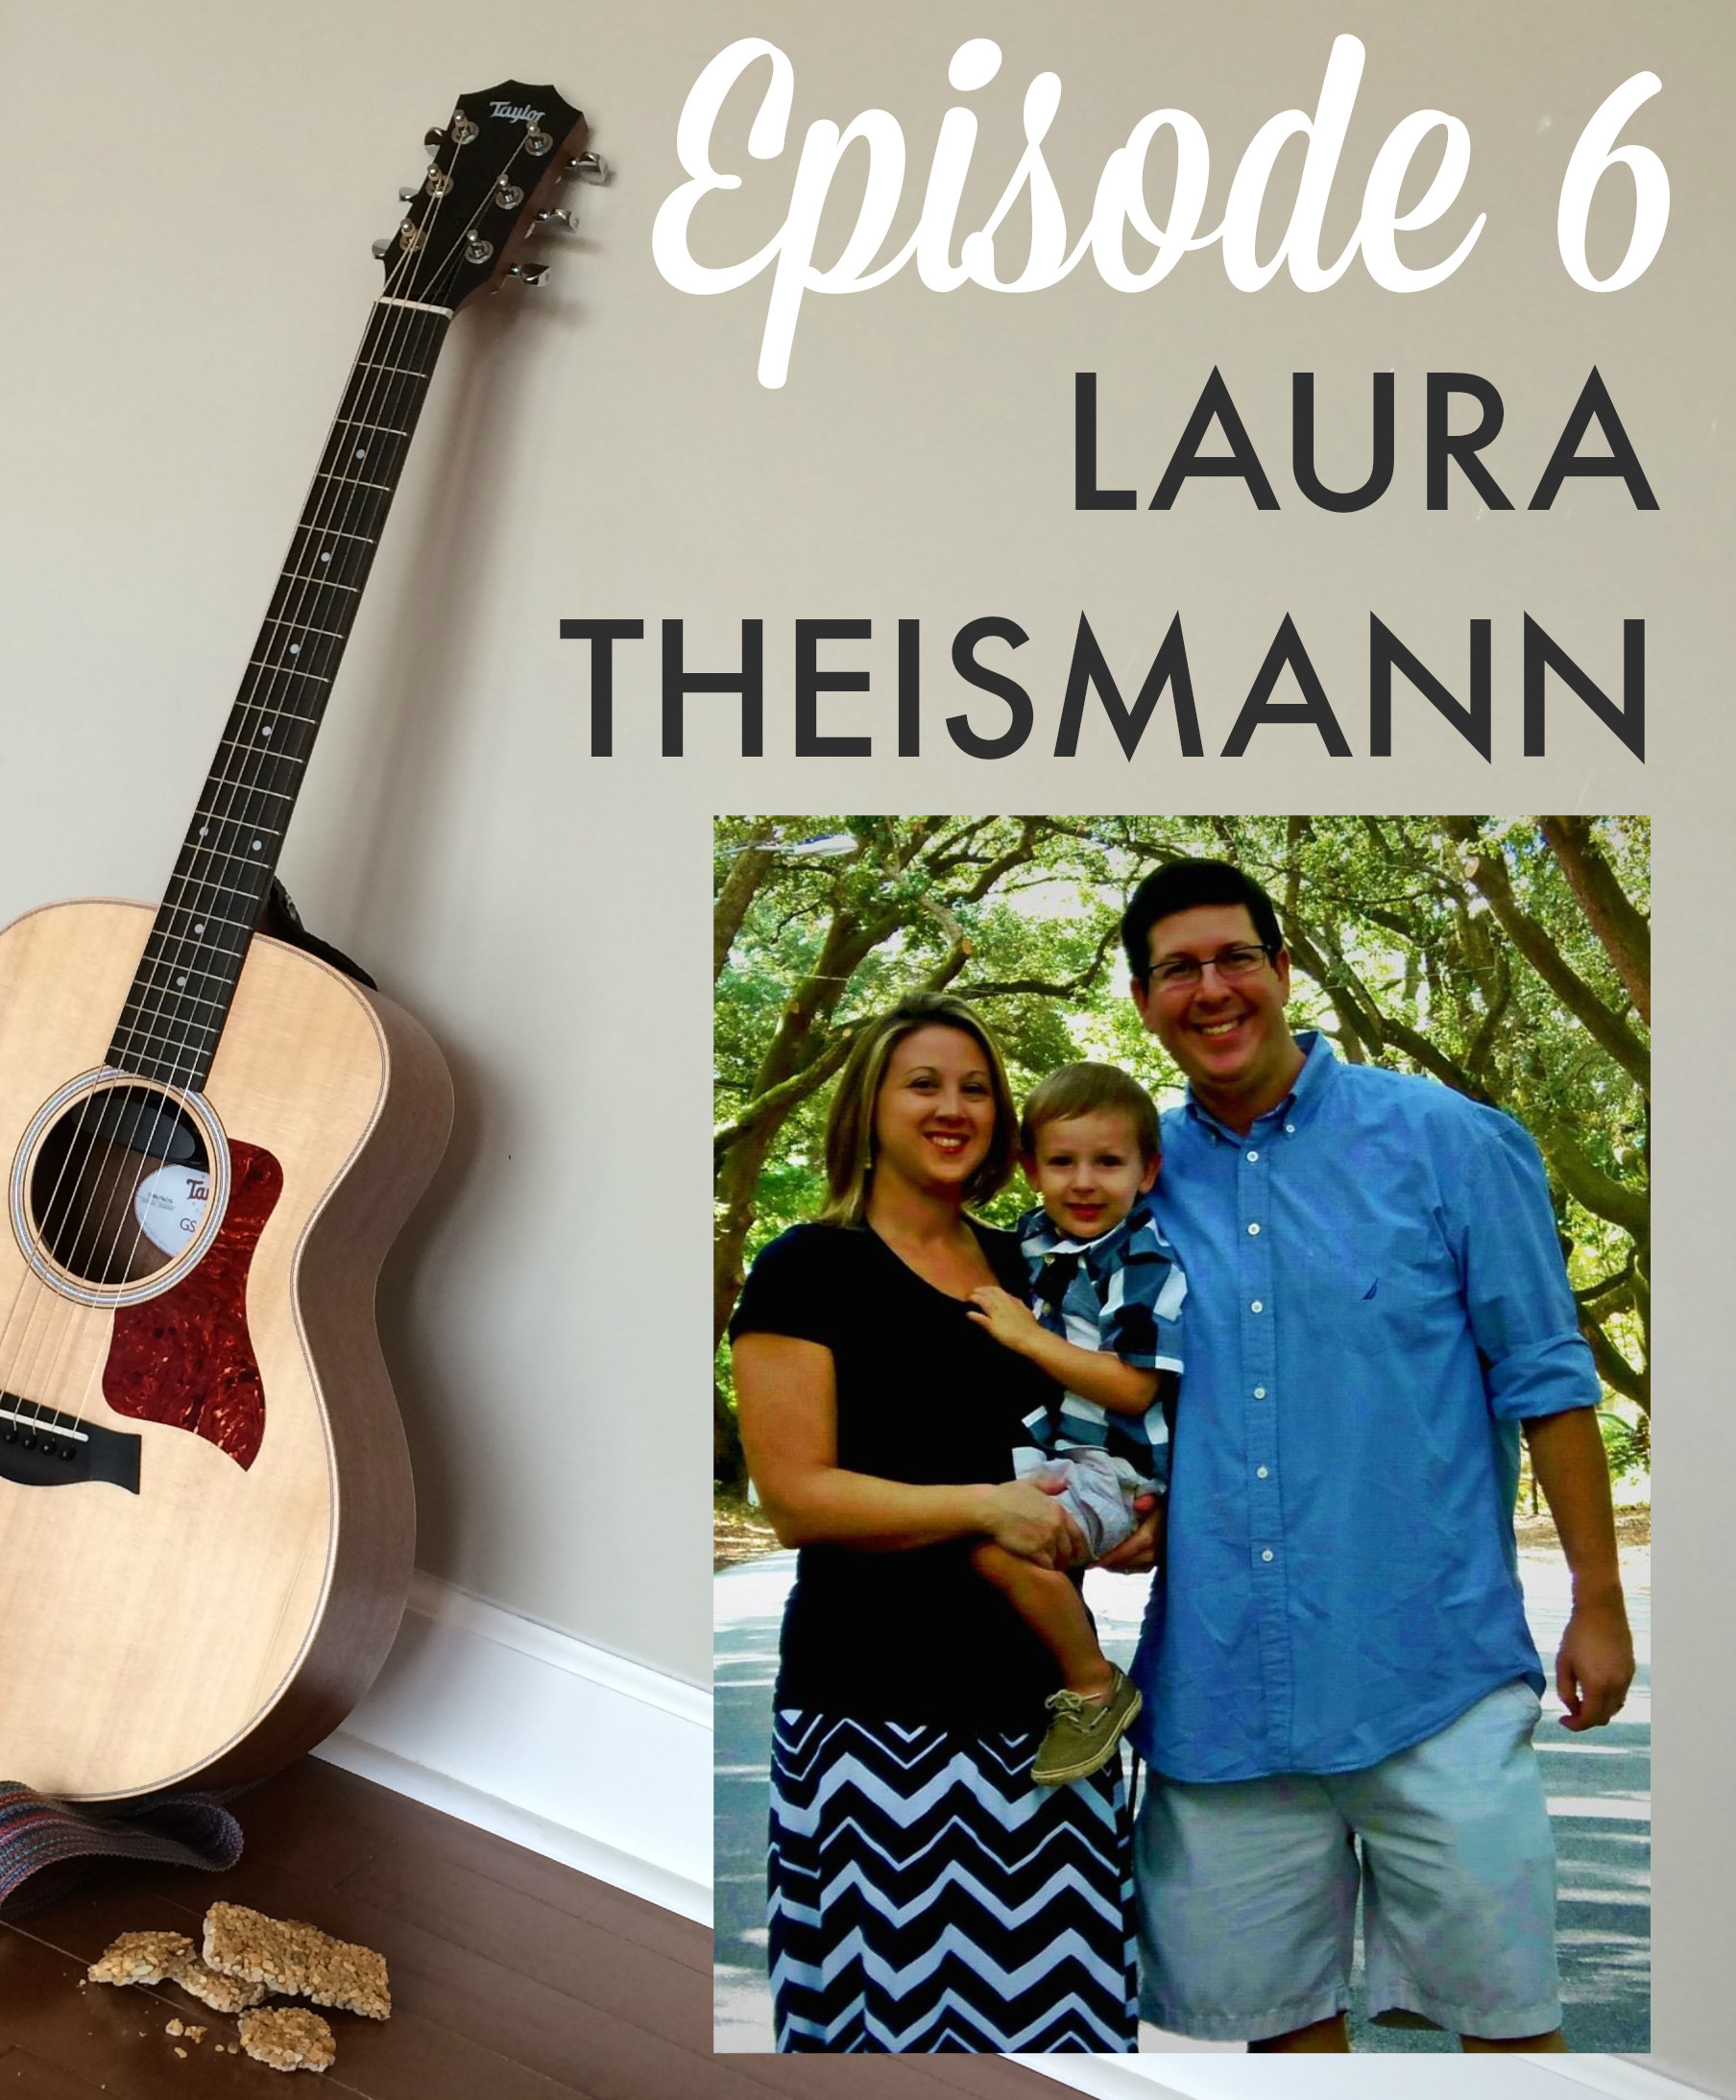 GGB Episode 6: Laura Theismann